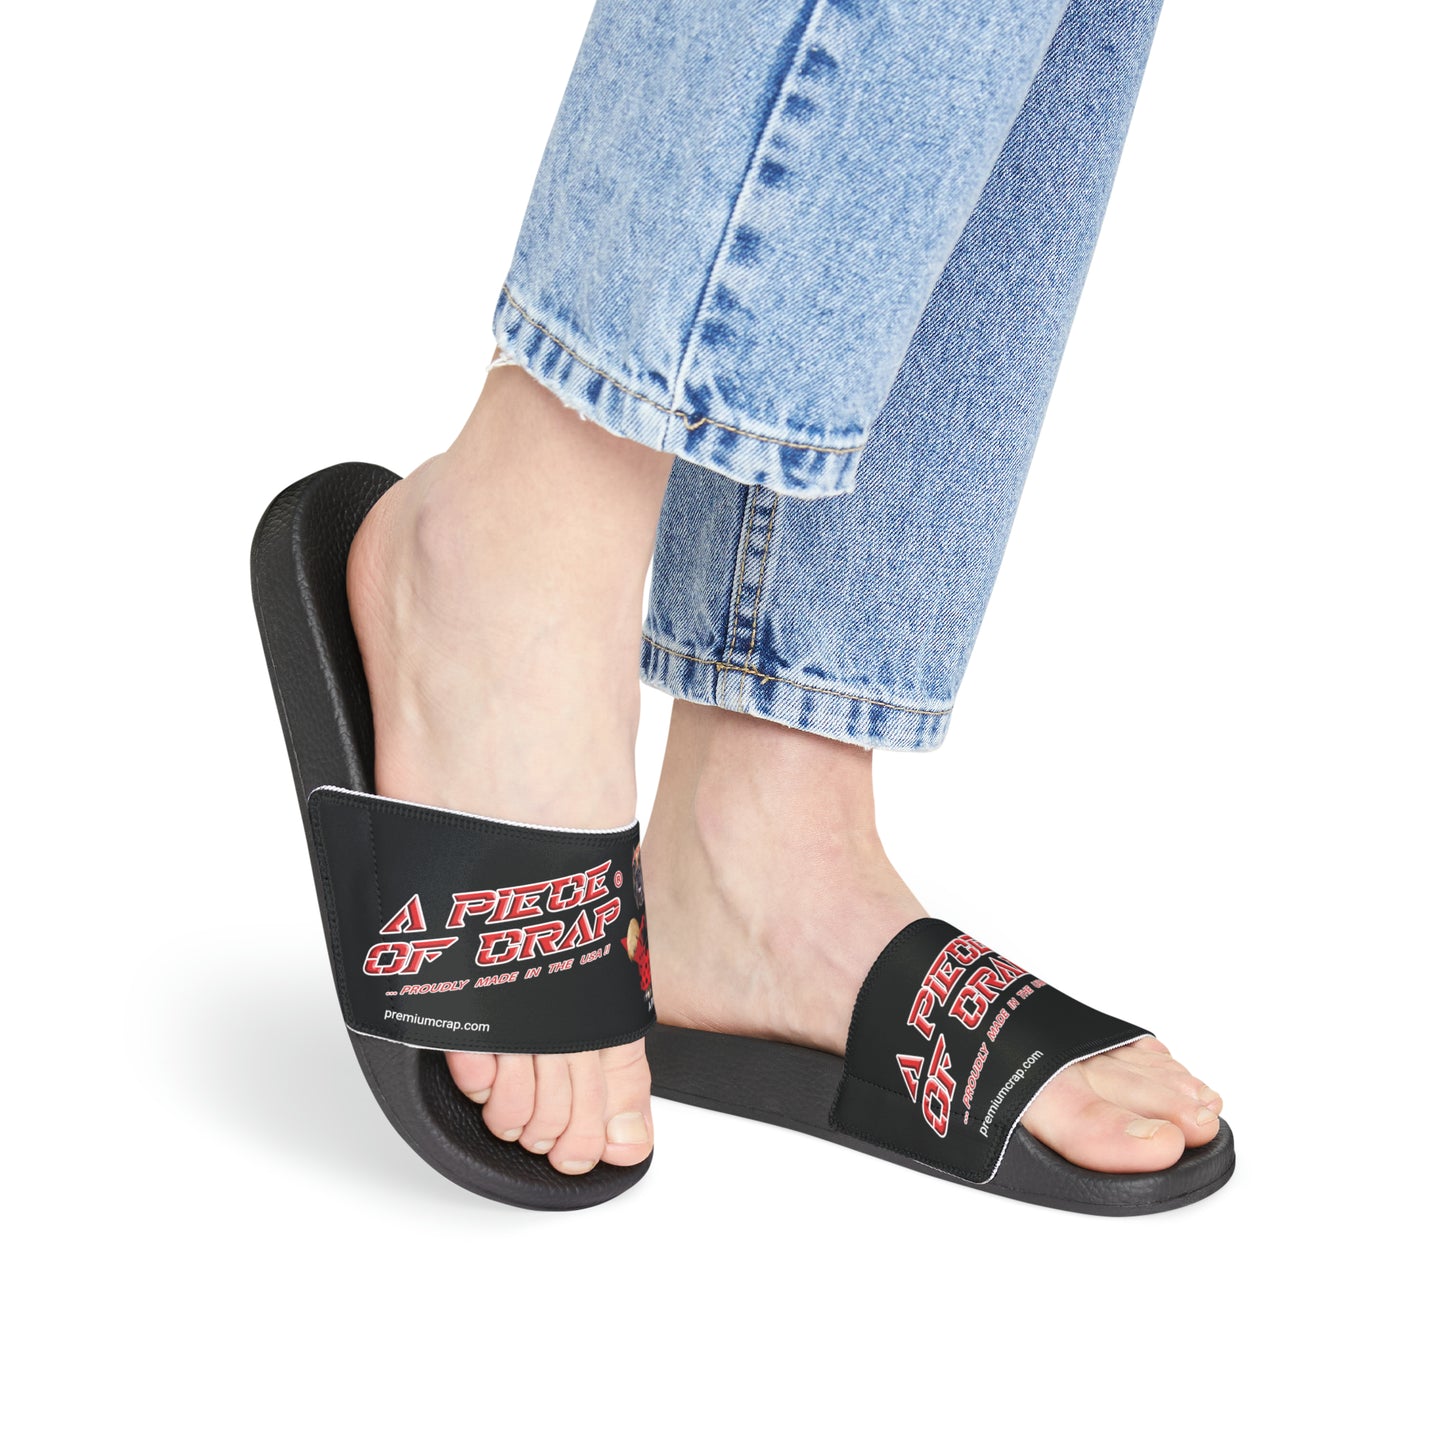 A Piece Of Crap II Women's PU Slide Sandals